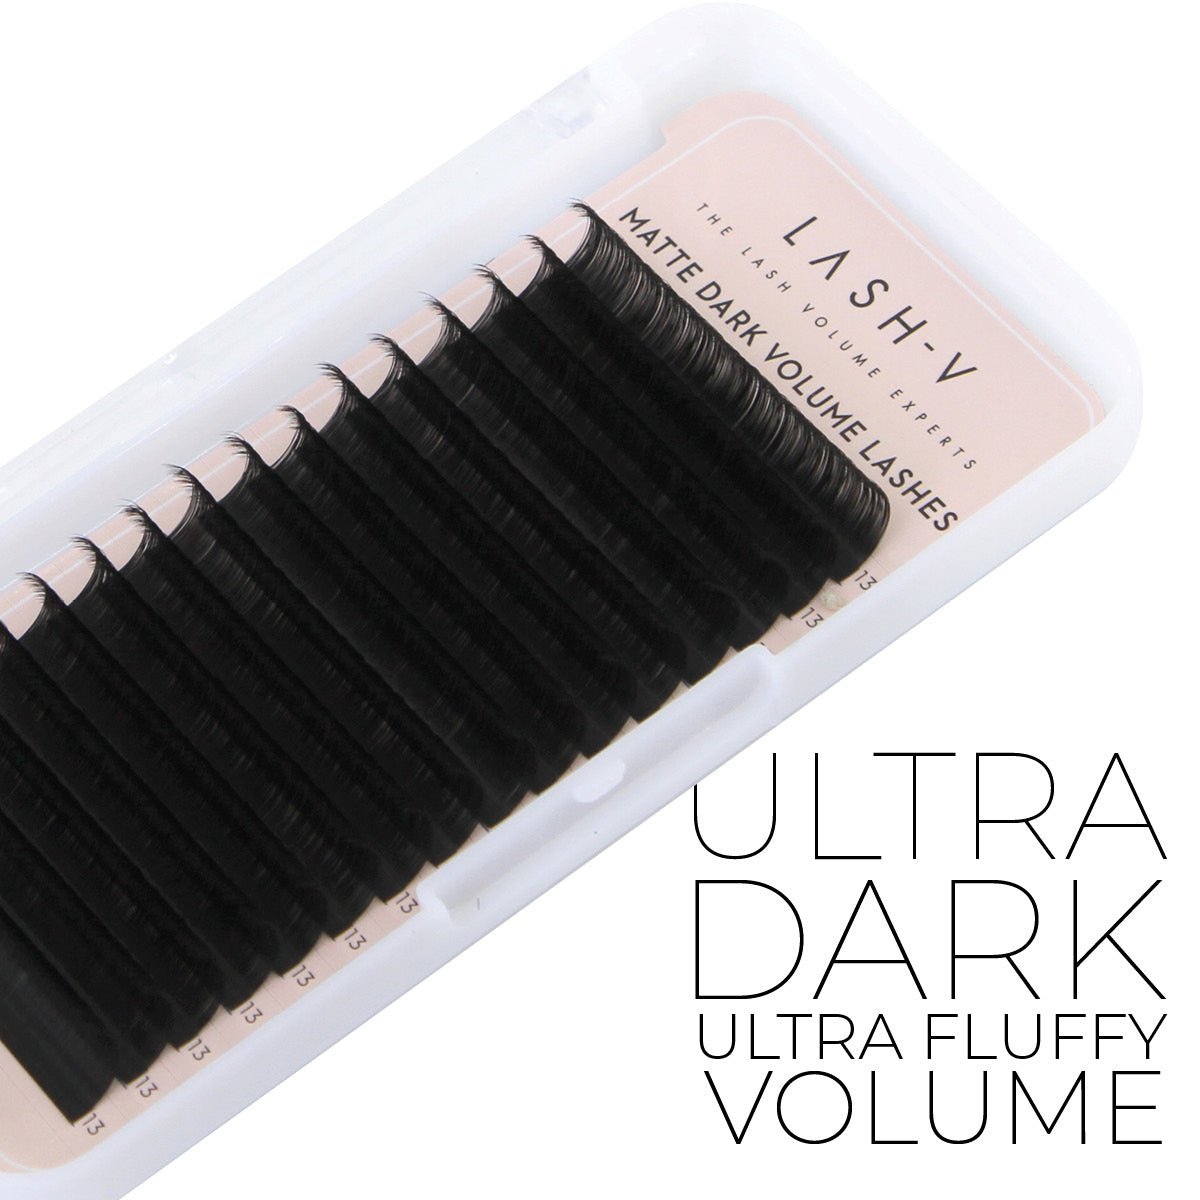 Matte Dark Volume Lashes - 0.05 - D Curl - LASH V